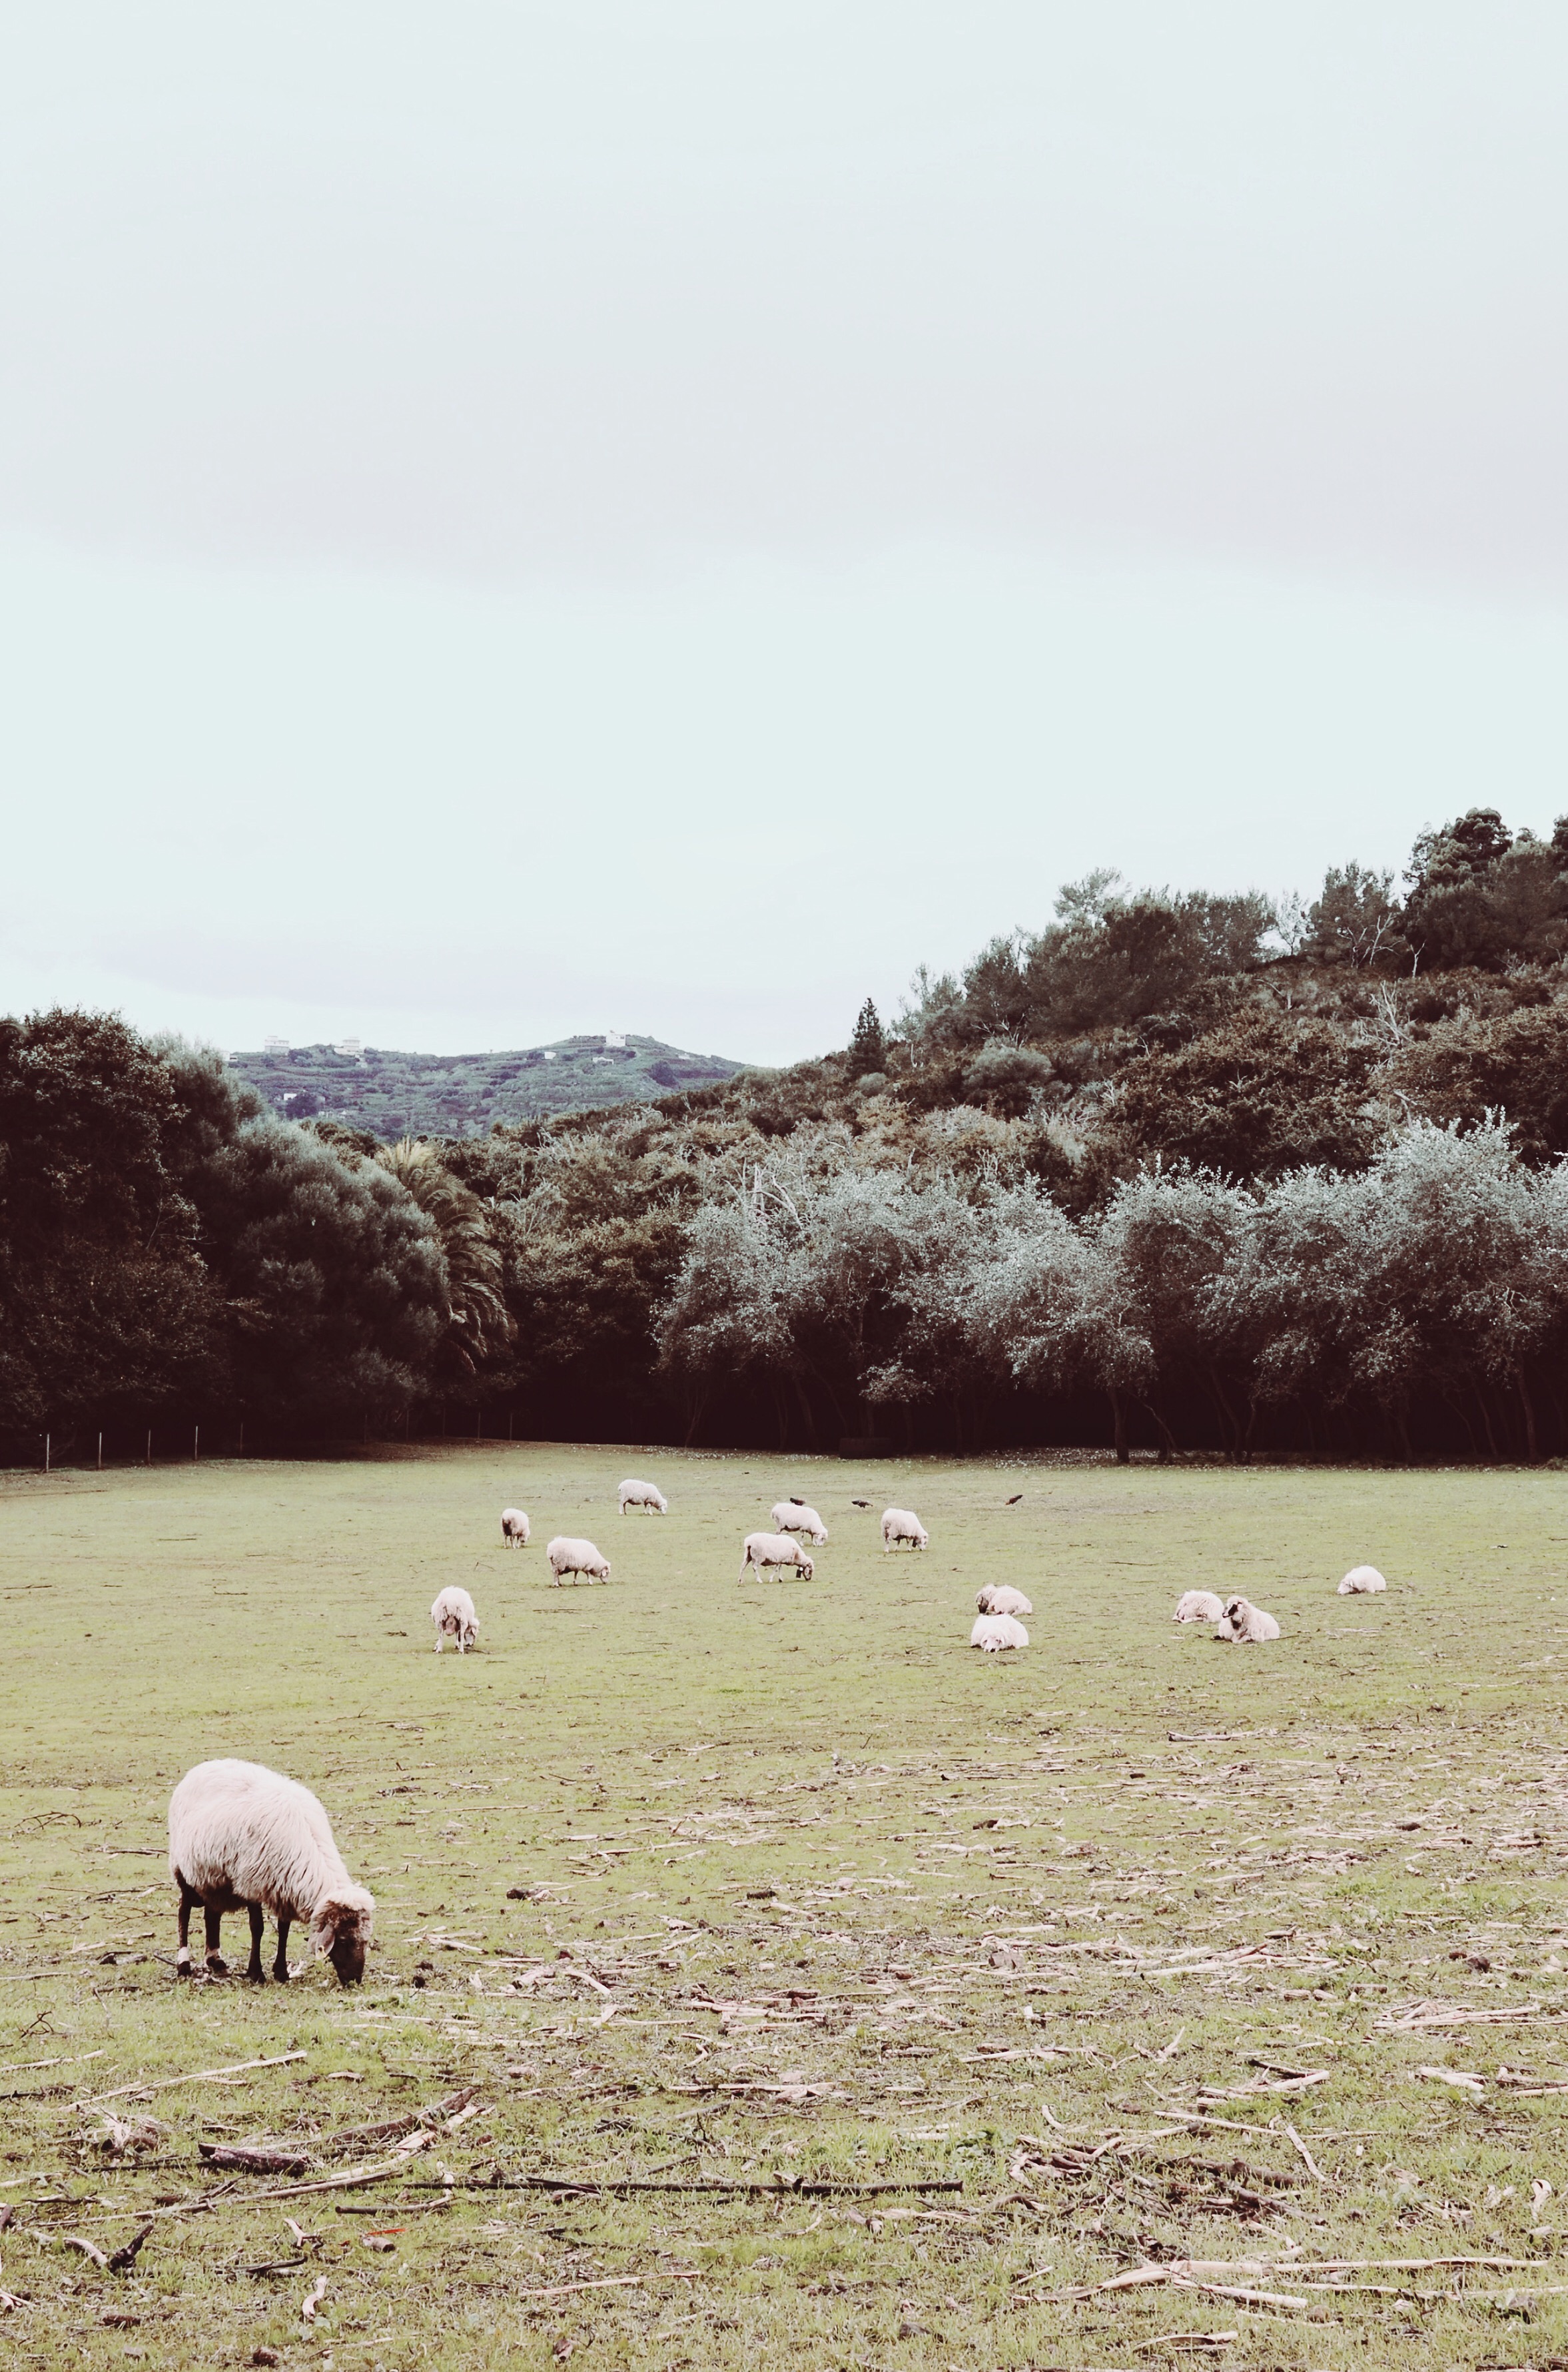 Sheep image by @isr4el